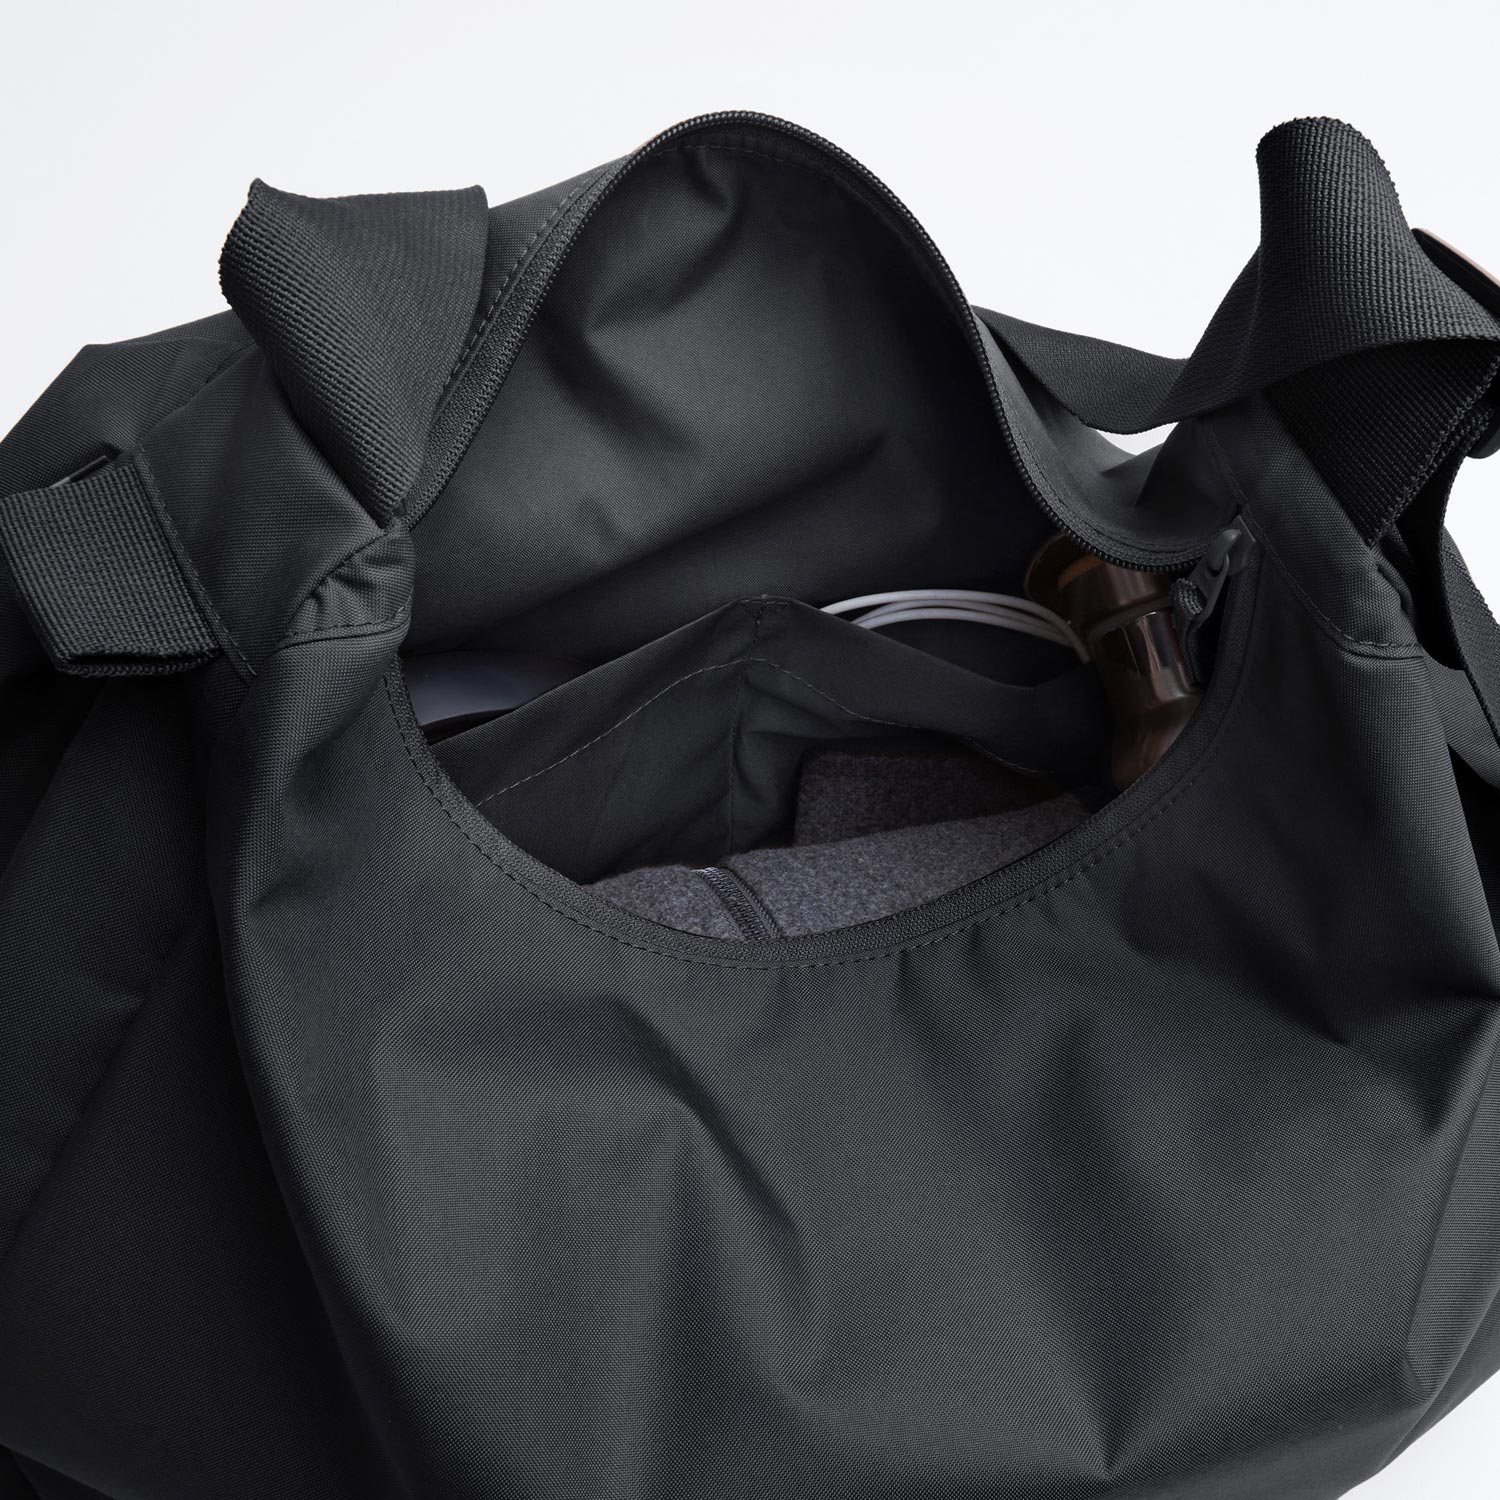 Got Bag Umhängetasche Curved Bag monochrome black